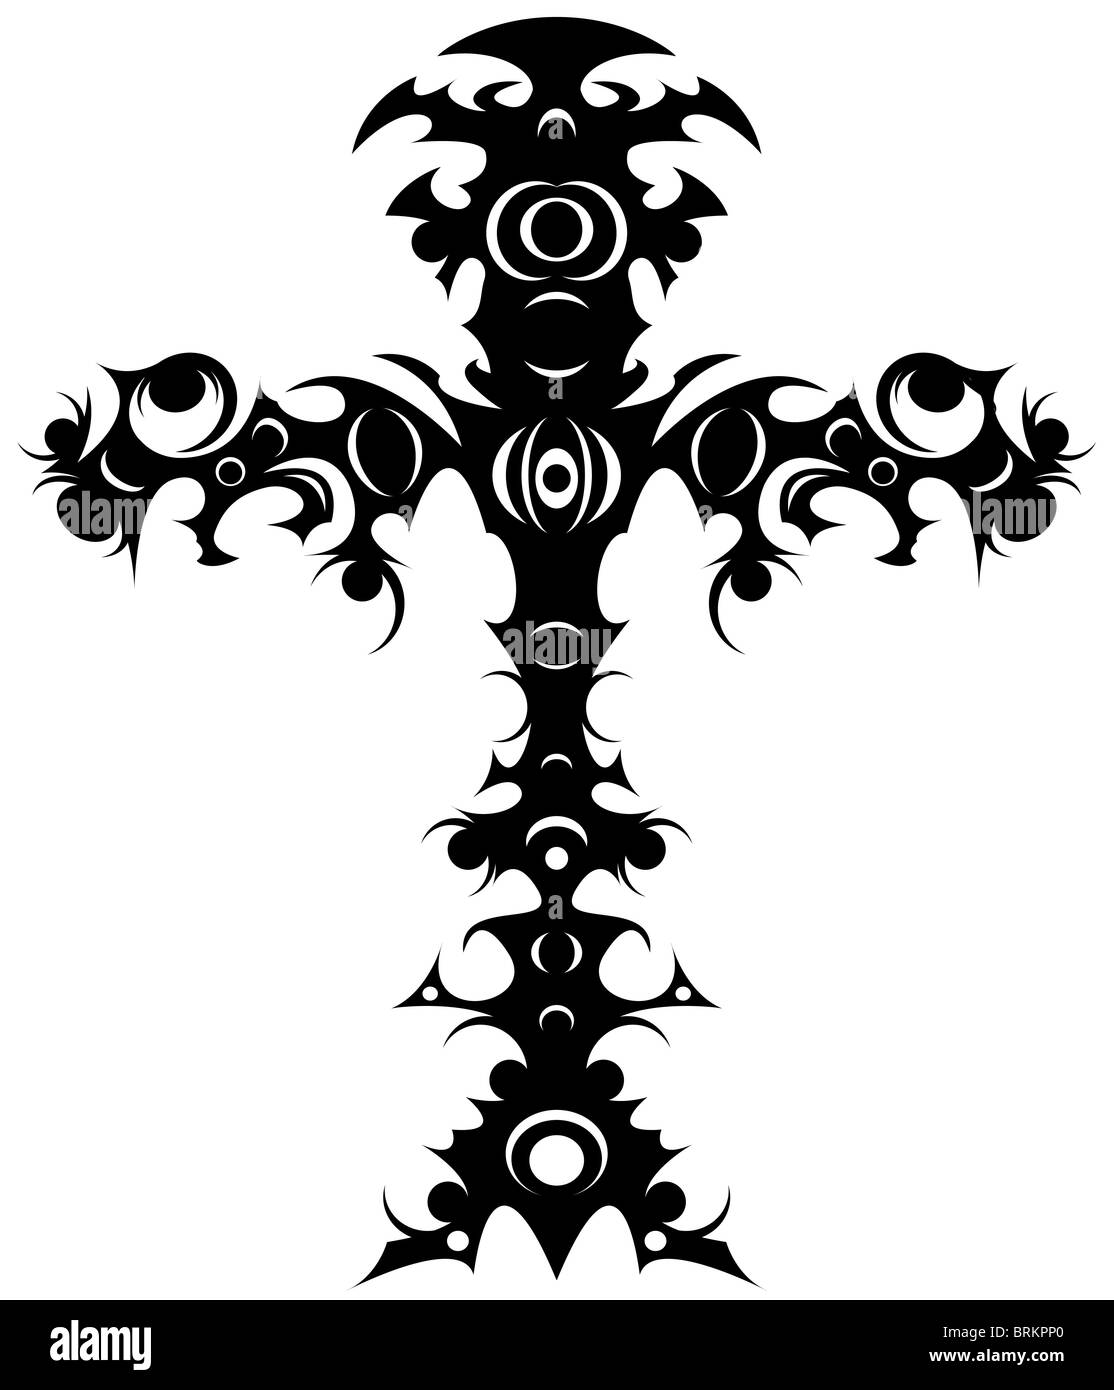 Illustration of an ornate tribal cross tattoo Stock Photo